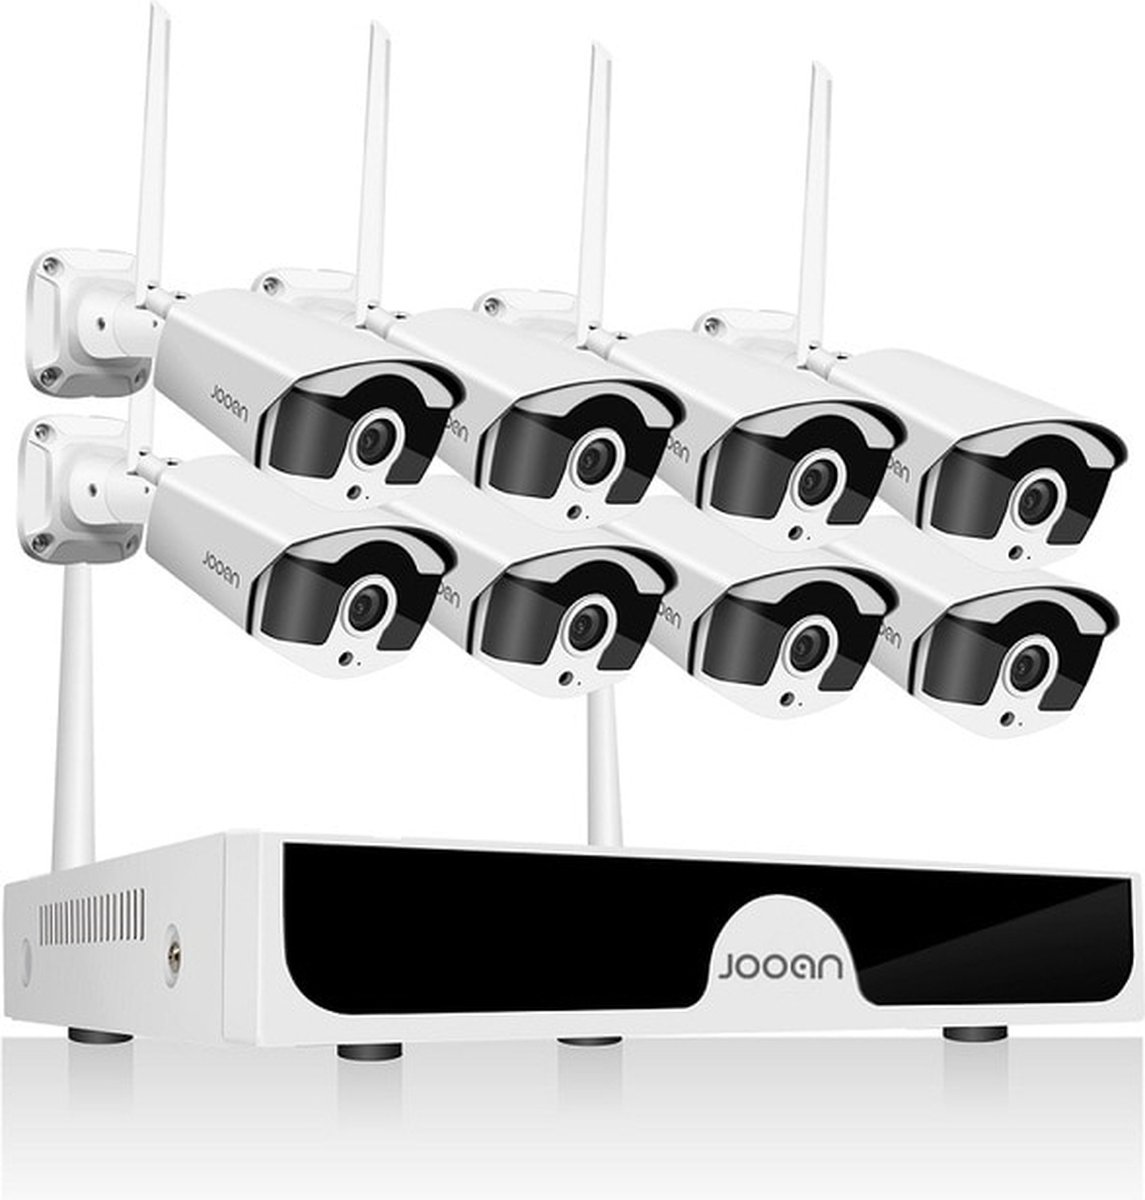 CCTV - Beveiligingscamera set met 8 Cameras Outdoor Buiten - Home Security Camera Systeem - Wifi Camera Set - Video + Audio-opname - Beveiligingscamera - 8 Camera’s - Nachtzicht - Motion Detector